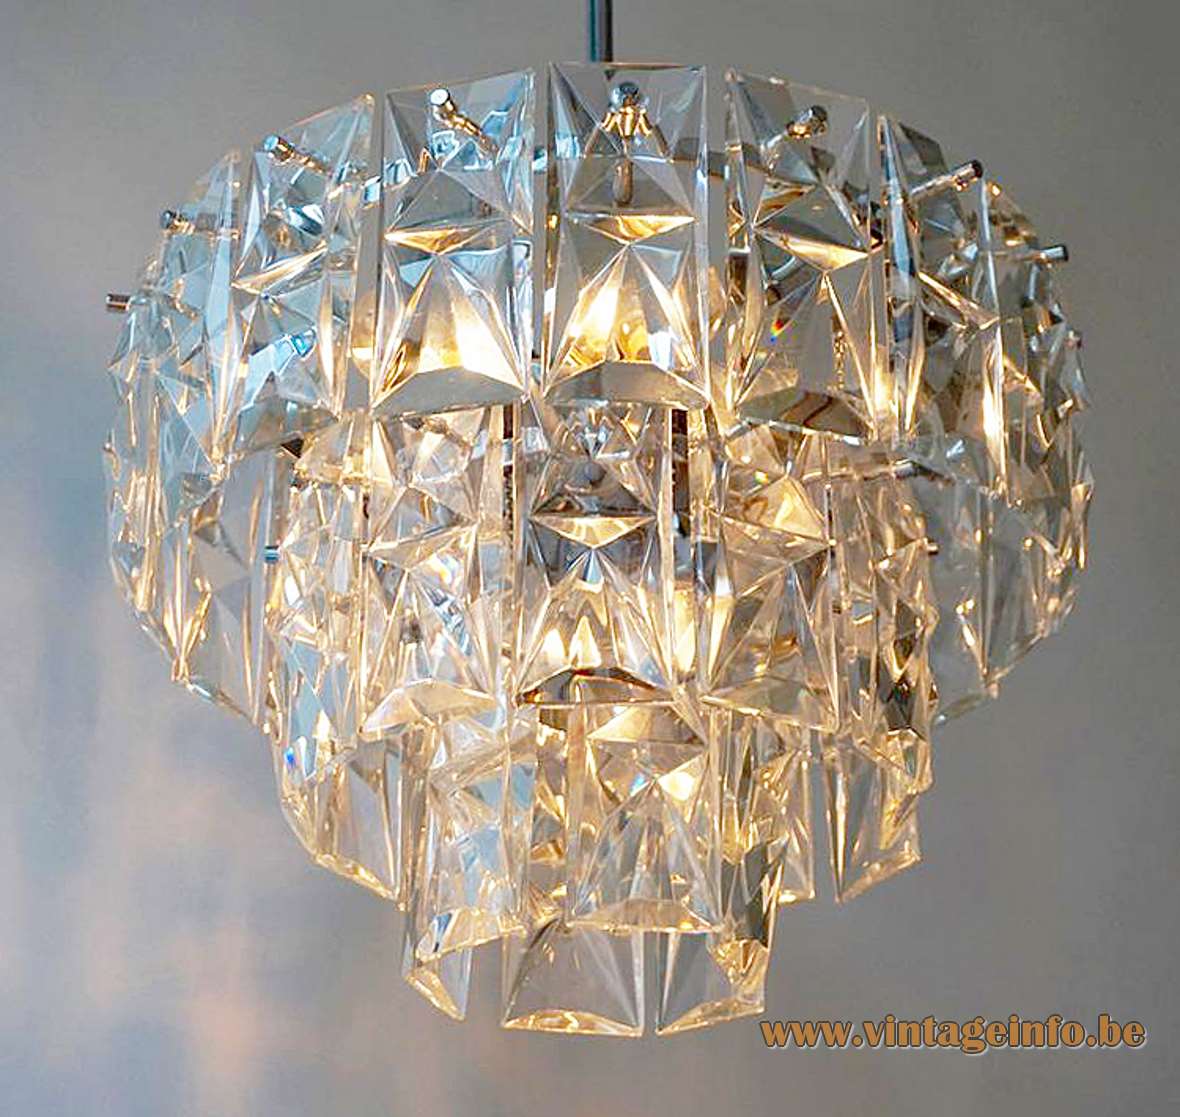 Kinkeldey 3 tier crystal prism chandelier multifaceted cut glass chrome frame rods 1960s 1970s Germany